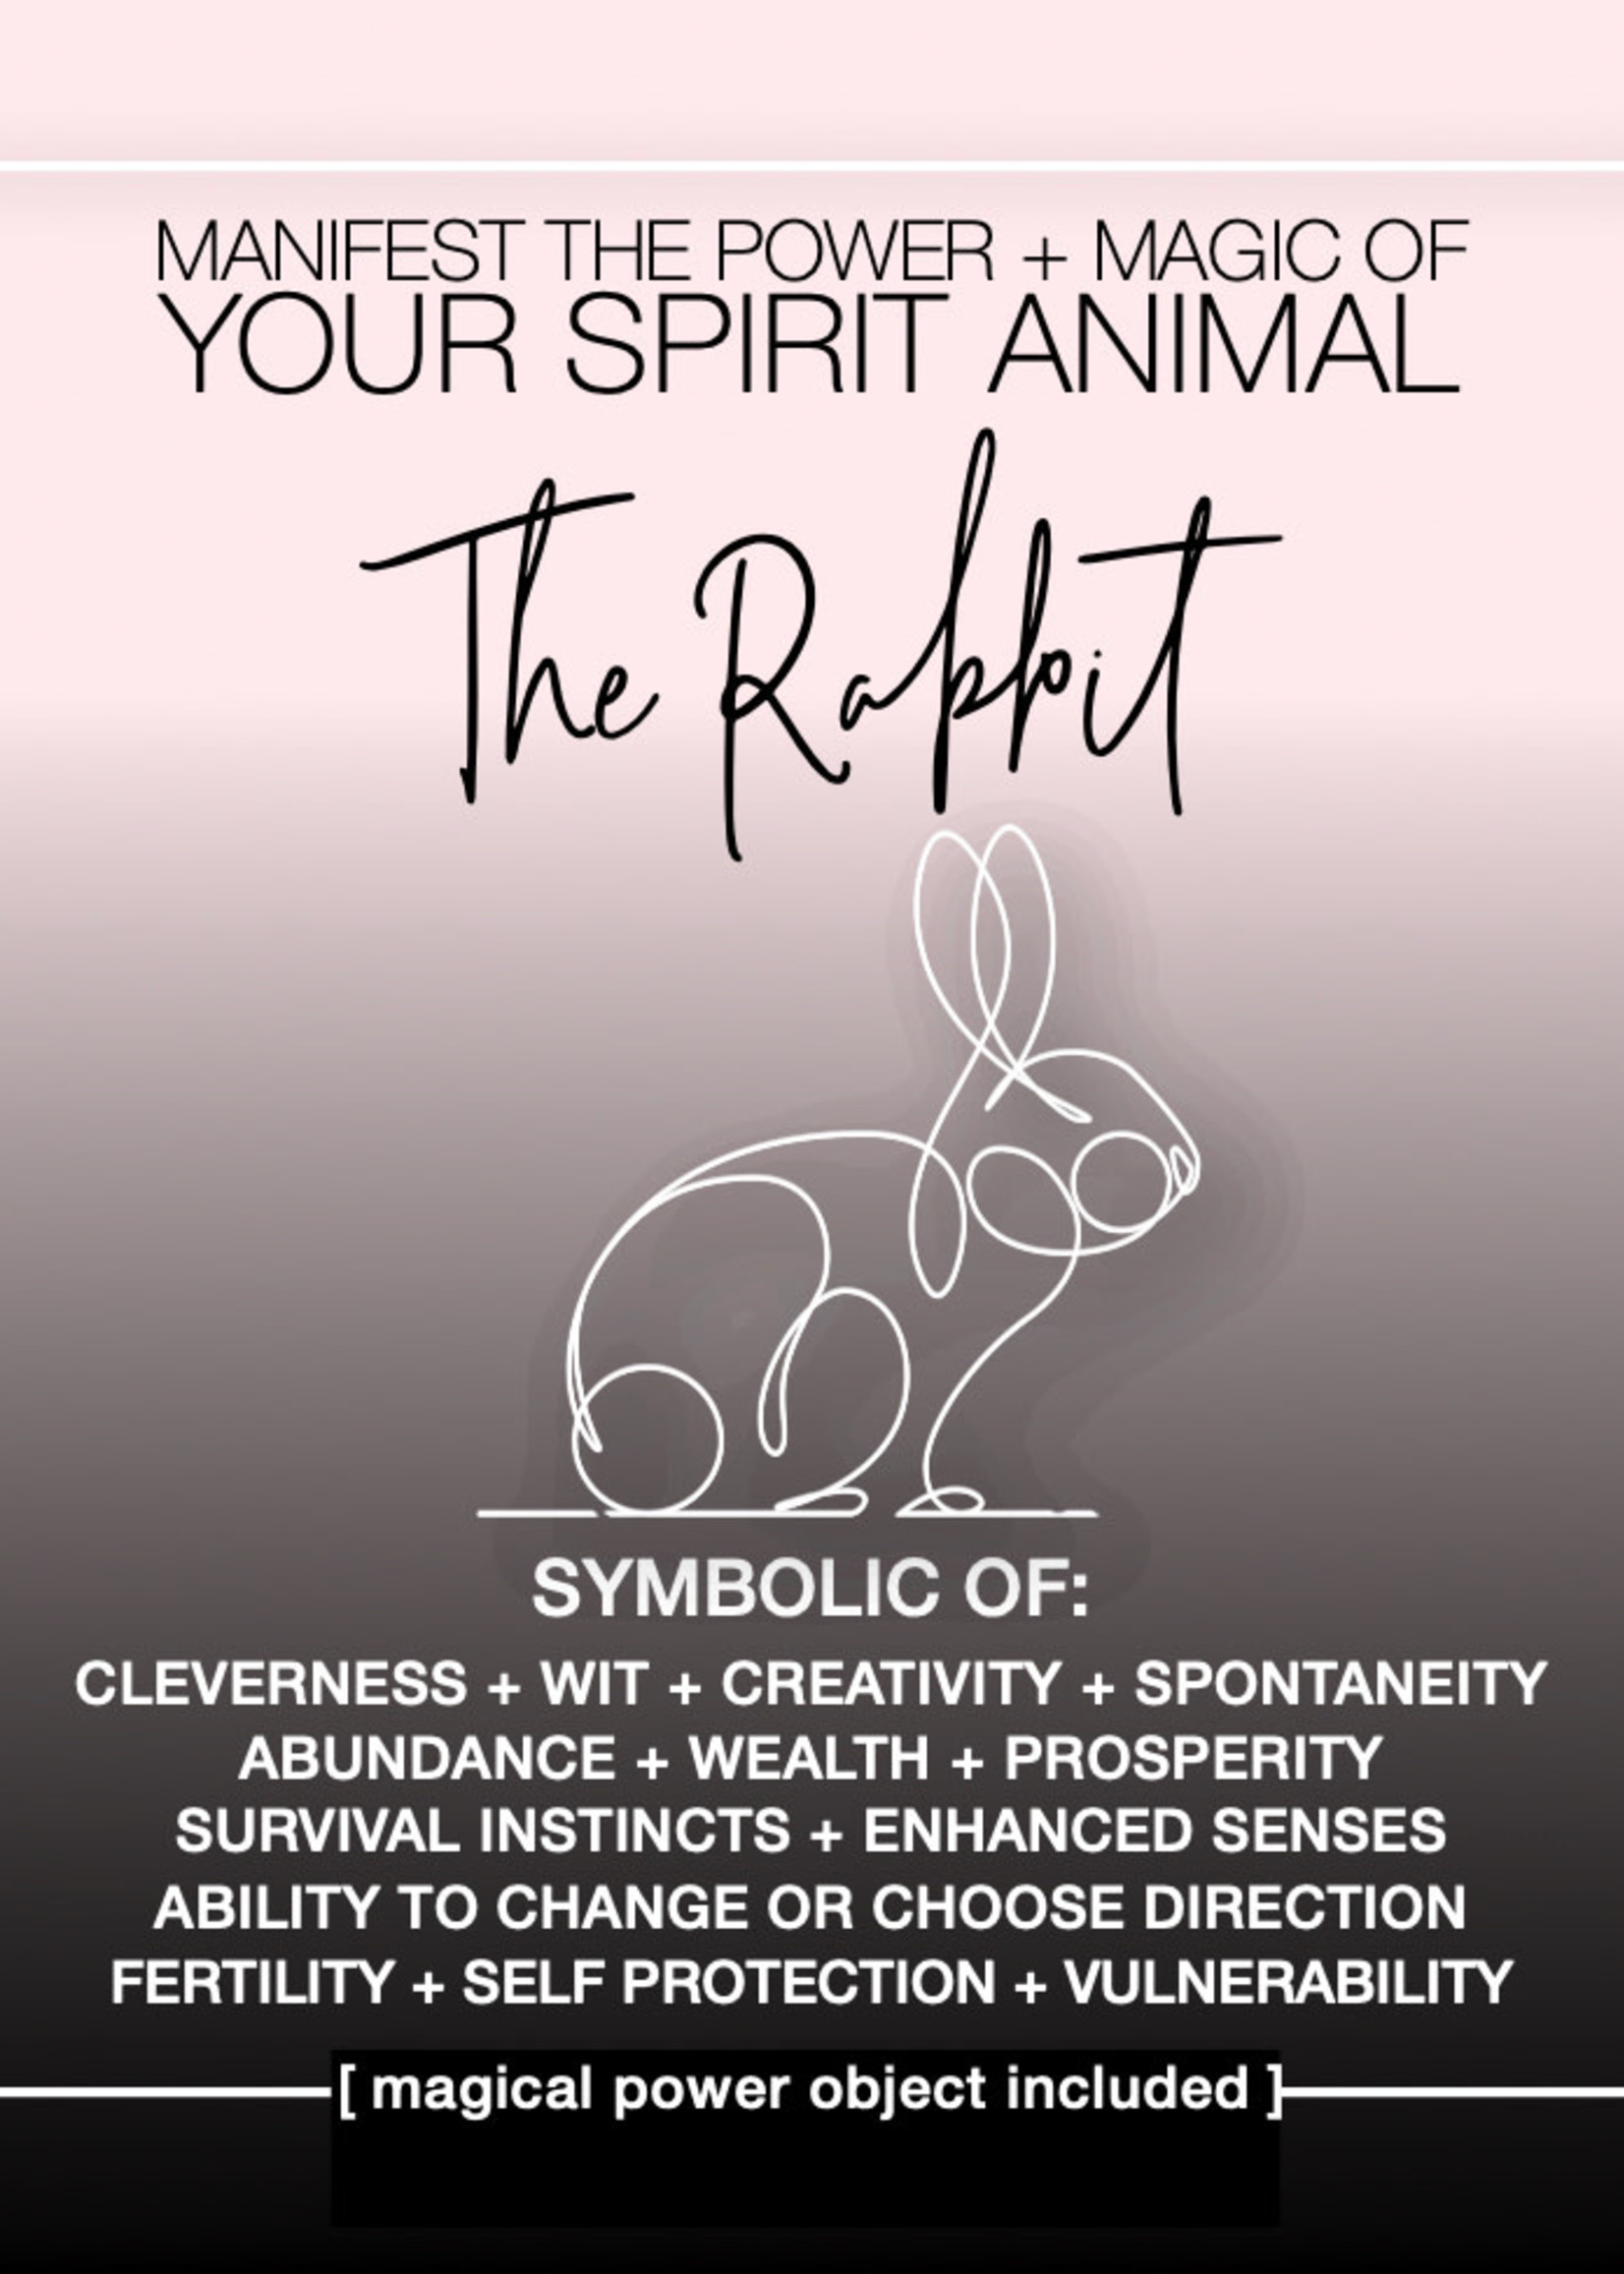 SPIRIT ANIMAL CARD: RABBIT